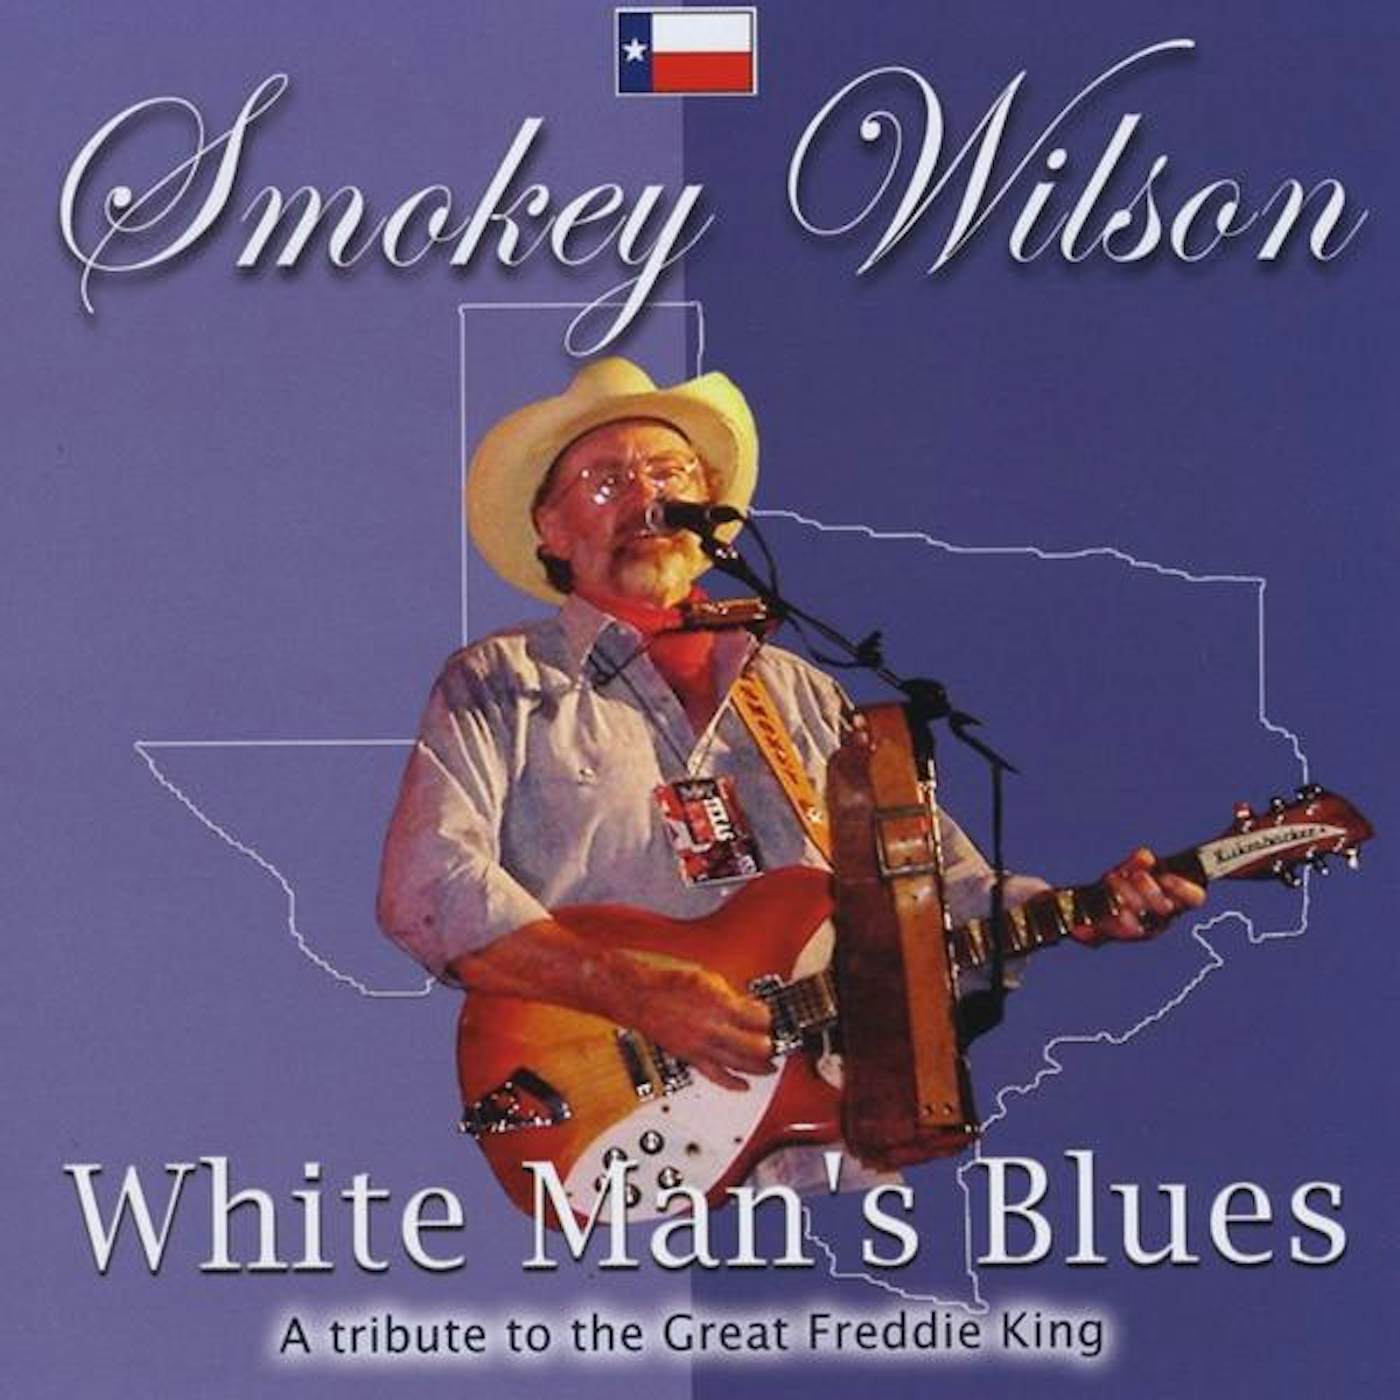 Smokey Wilson WHITE MAN'S BLUES CD